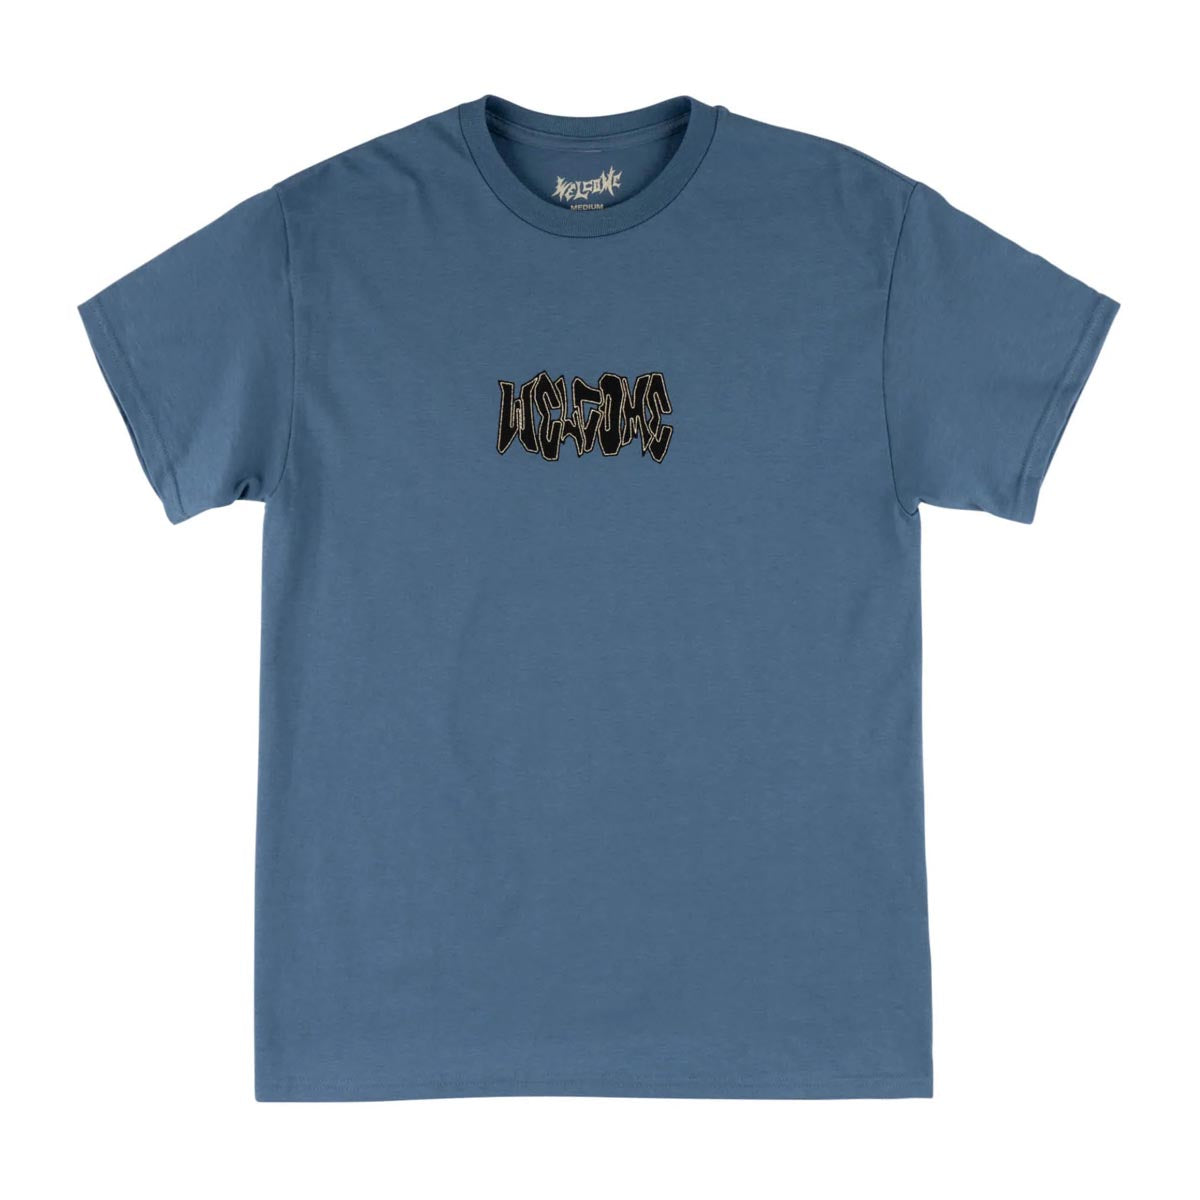 Welcome Nephilim T-Shirt - Indigo image 2